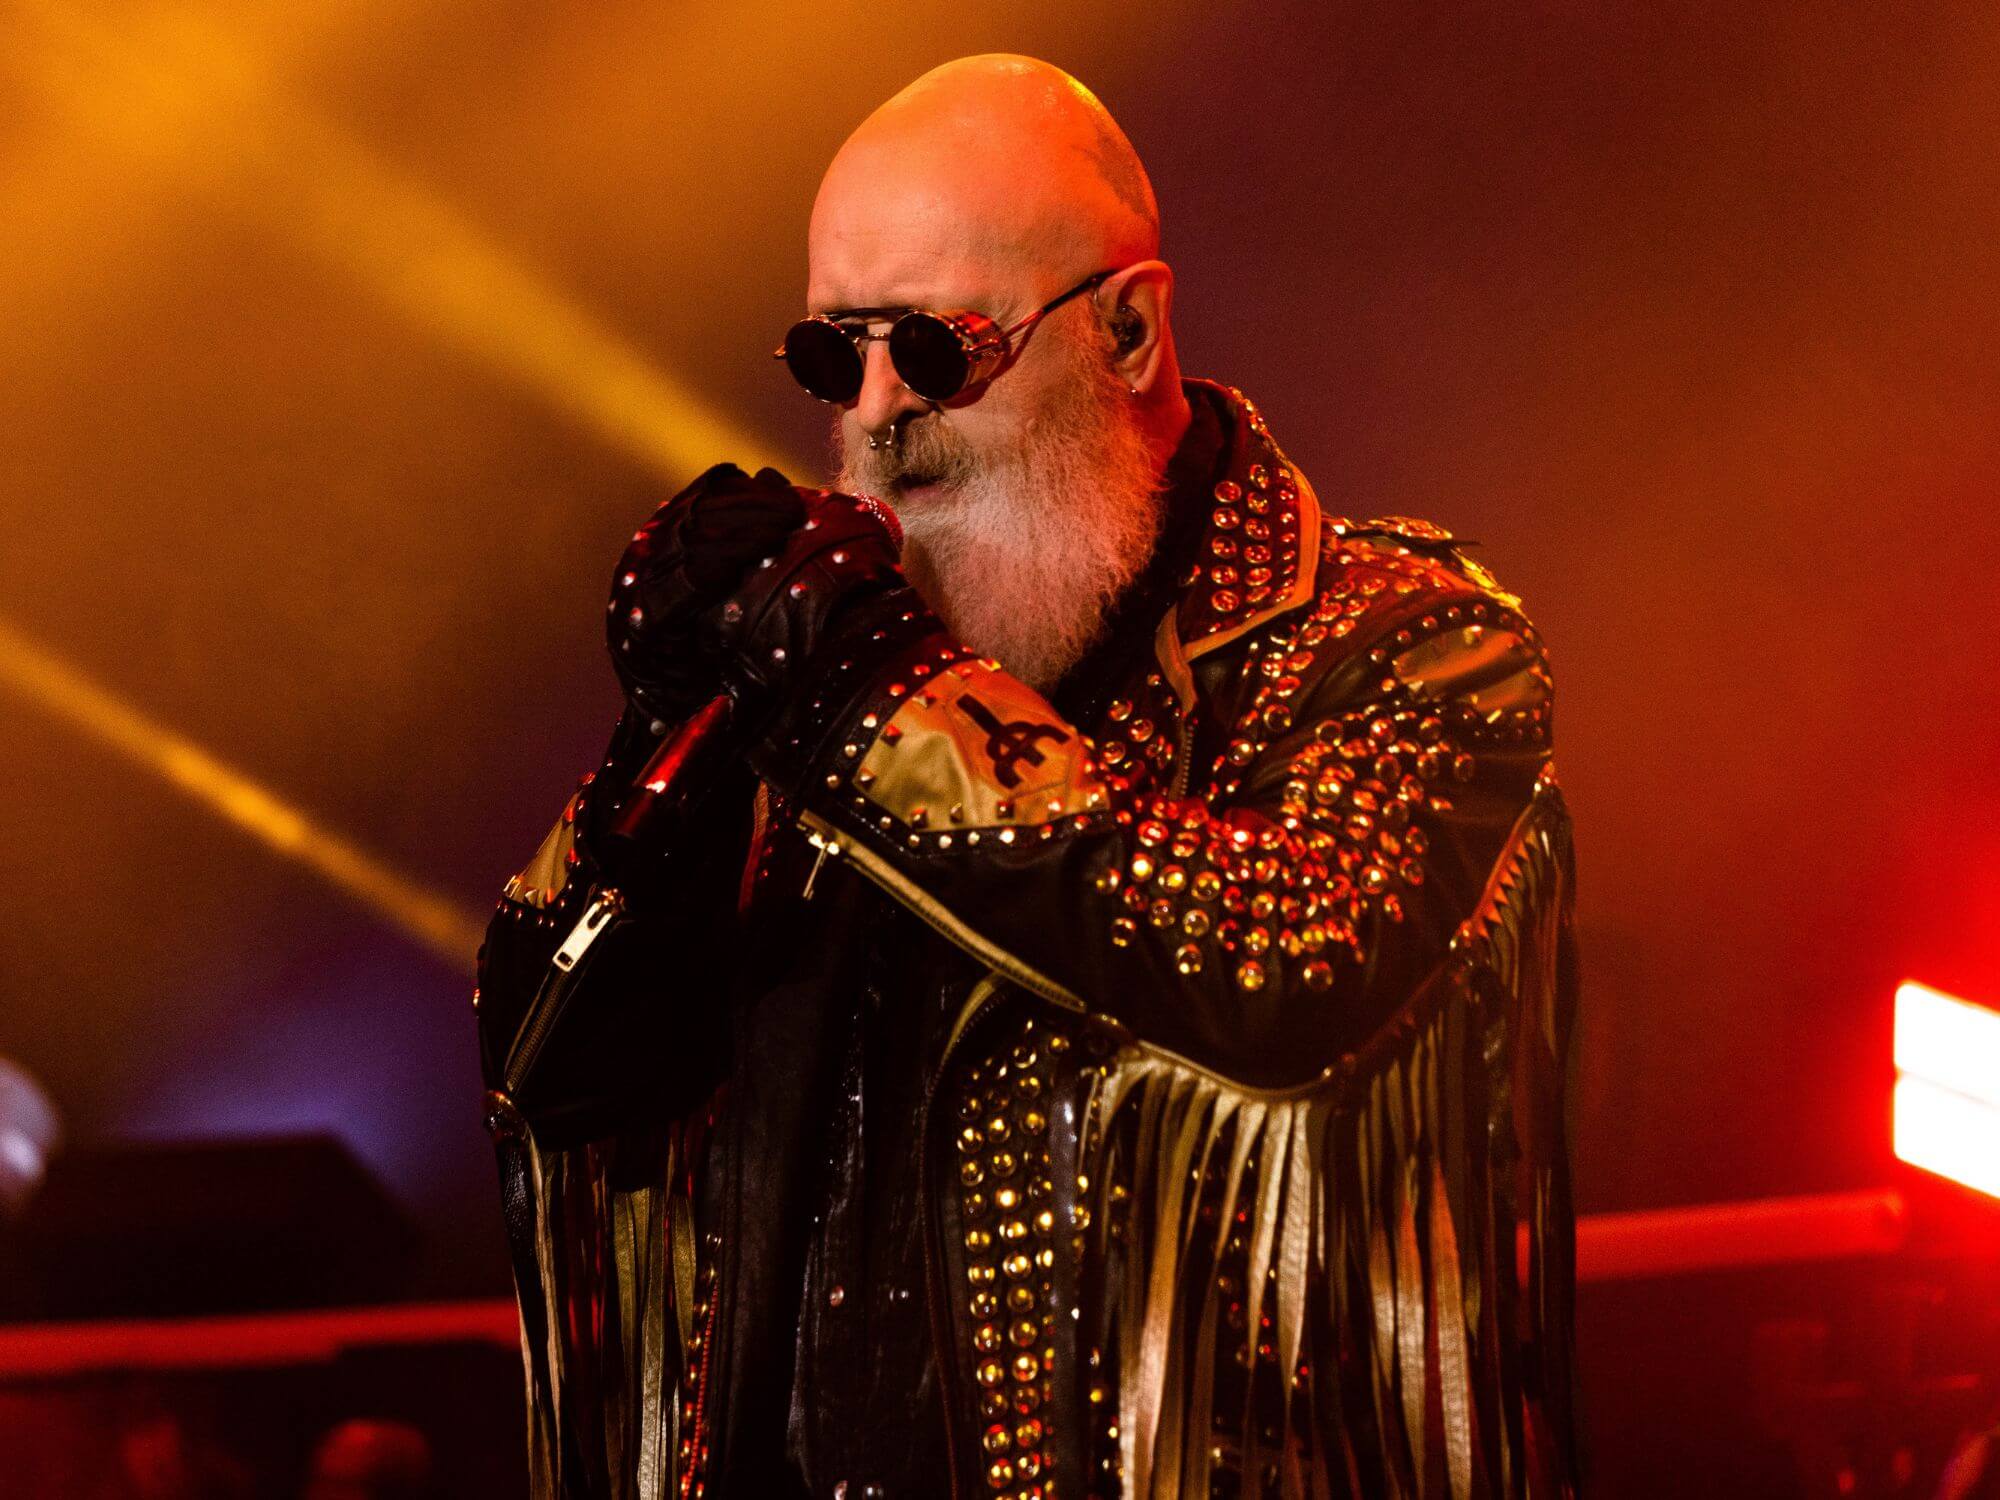 Judas Priest's Rob Halford